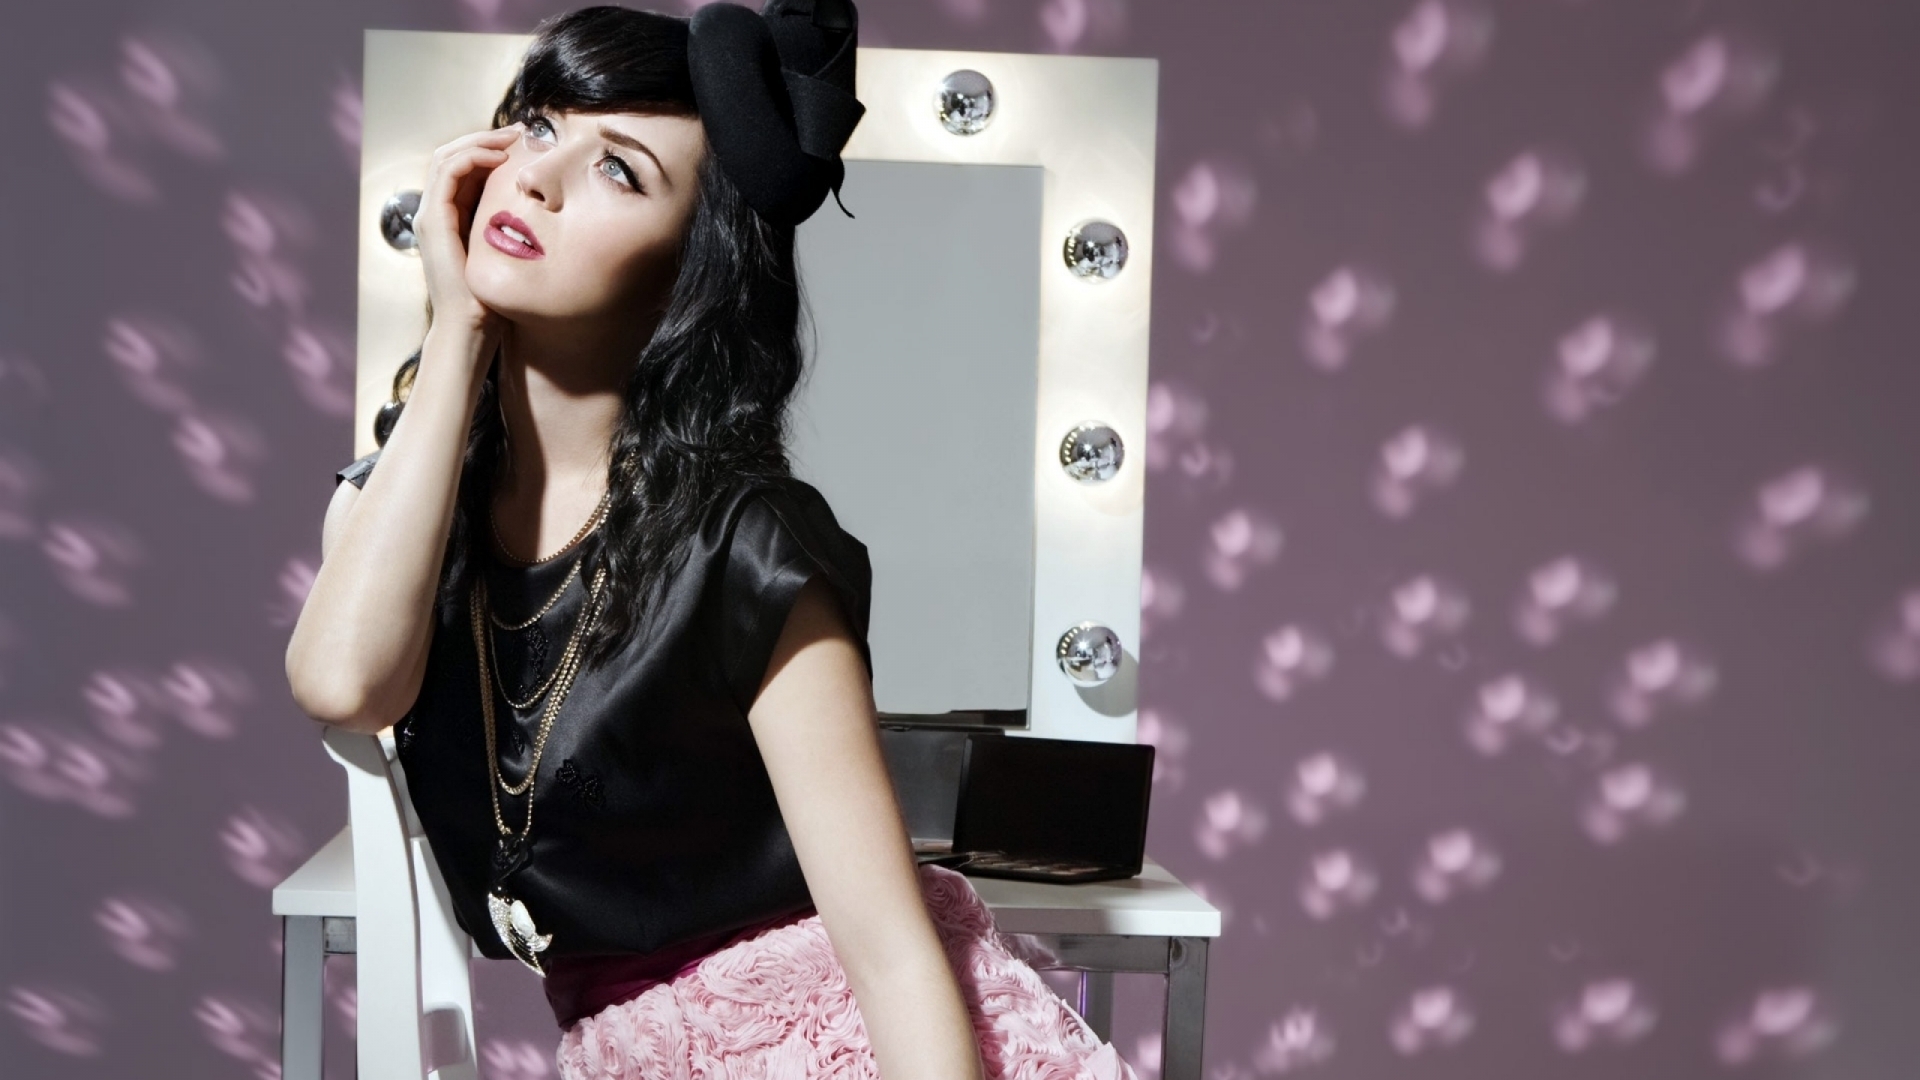 Descarga gratuita de fondo de pantalla para móvil de Música, Katy Perry.